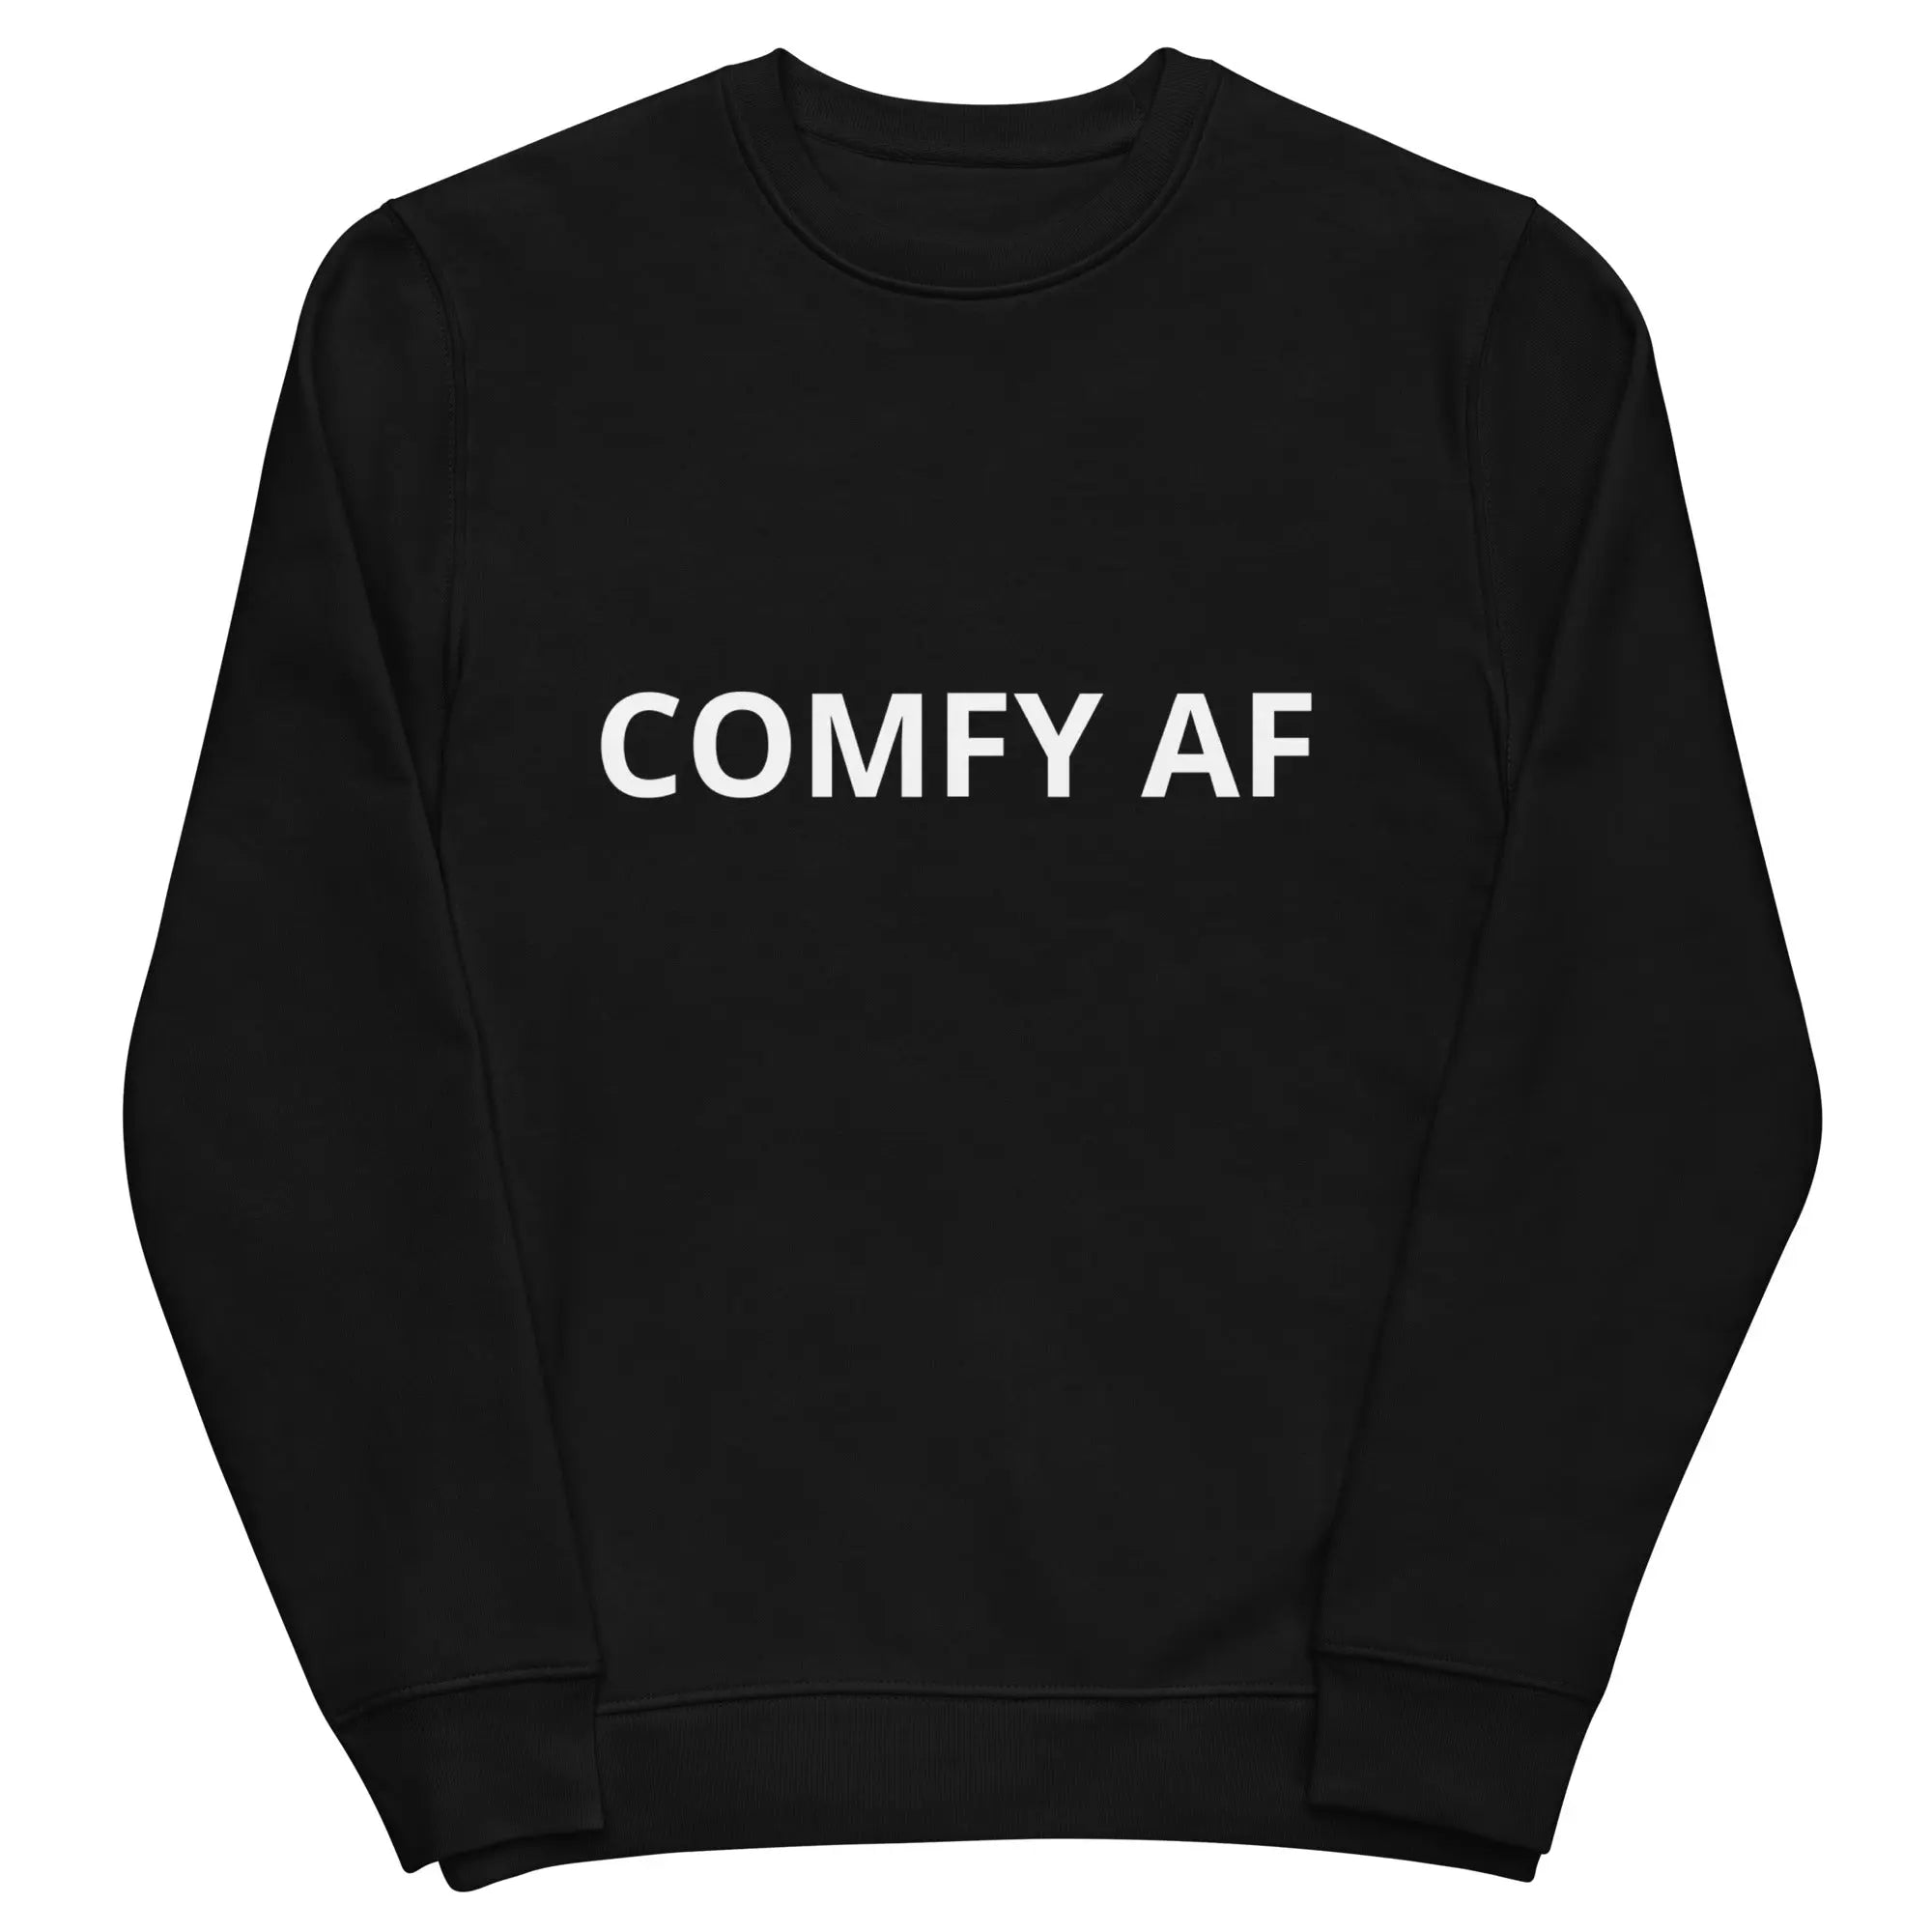 COMFY AF Men's Woman's eco sweatshirt by Coffee Religion in Black